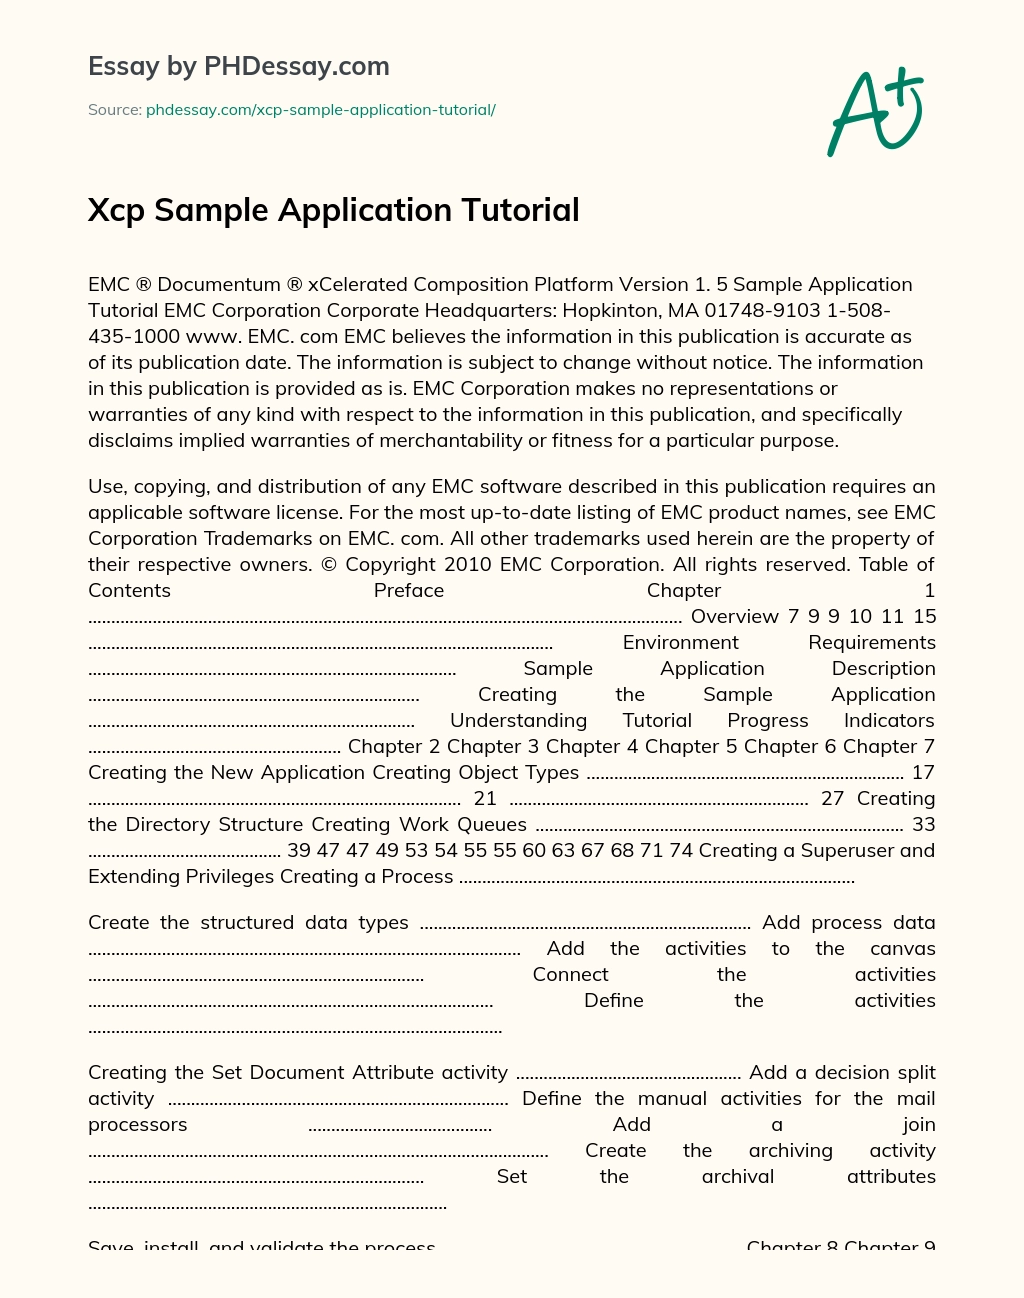 Xcp Sample Application Tutorial essay